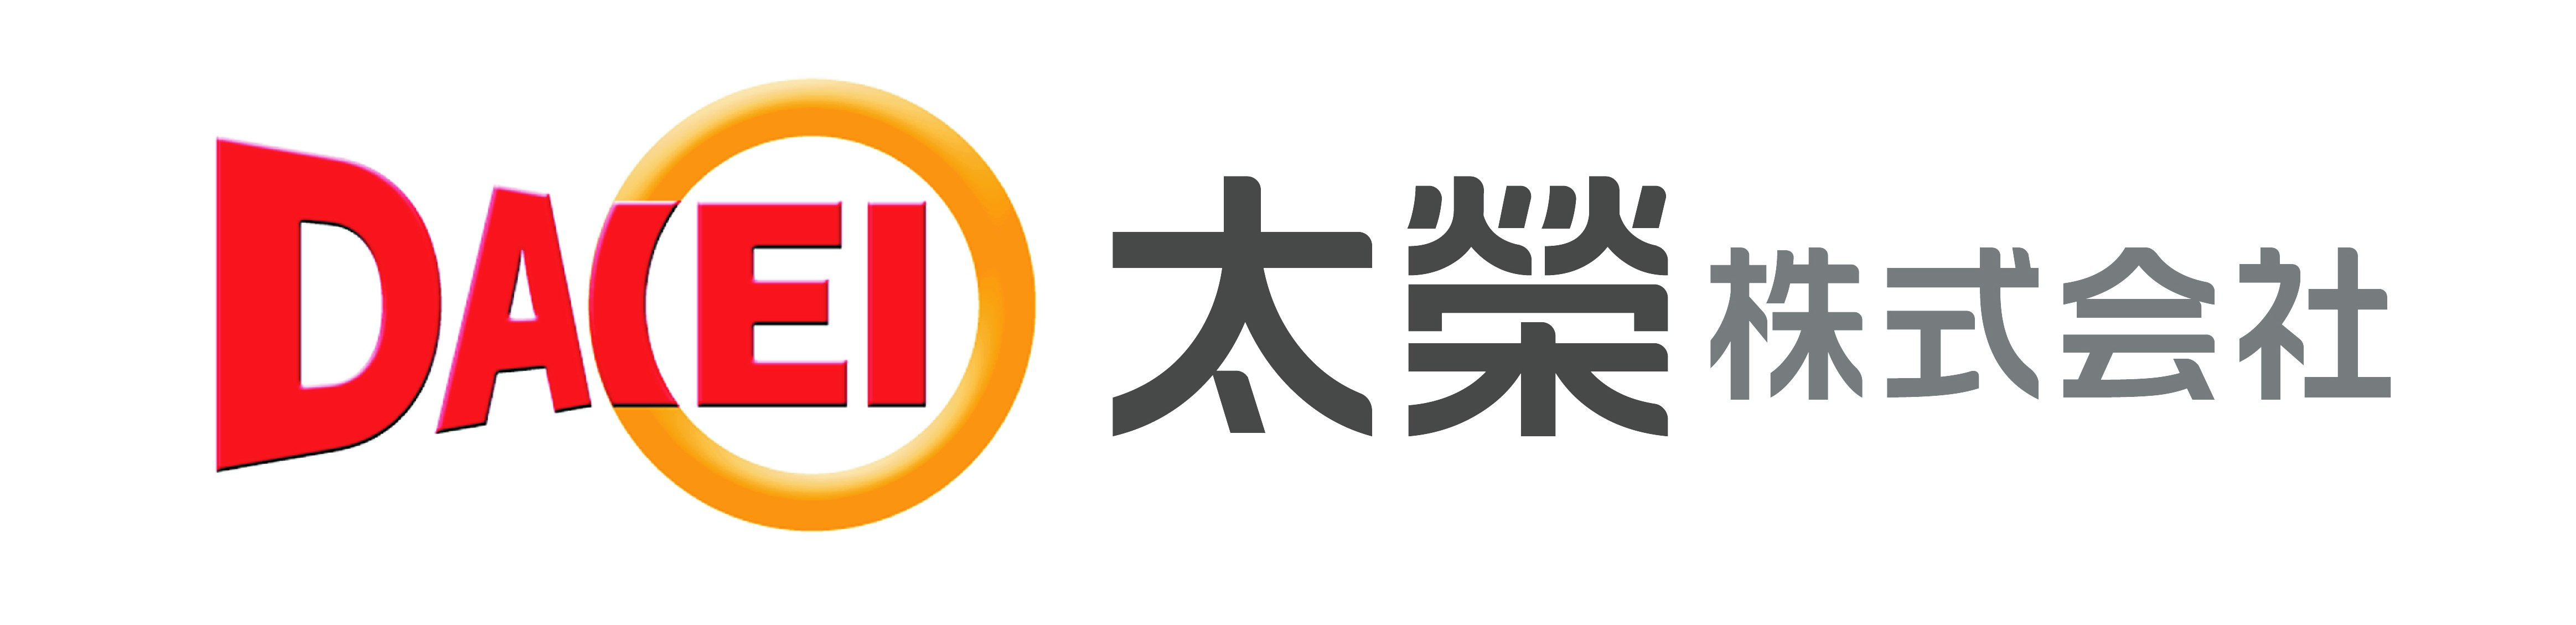 太榮株式会社ロゴ